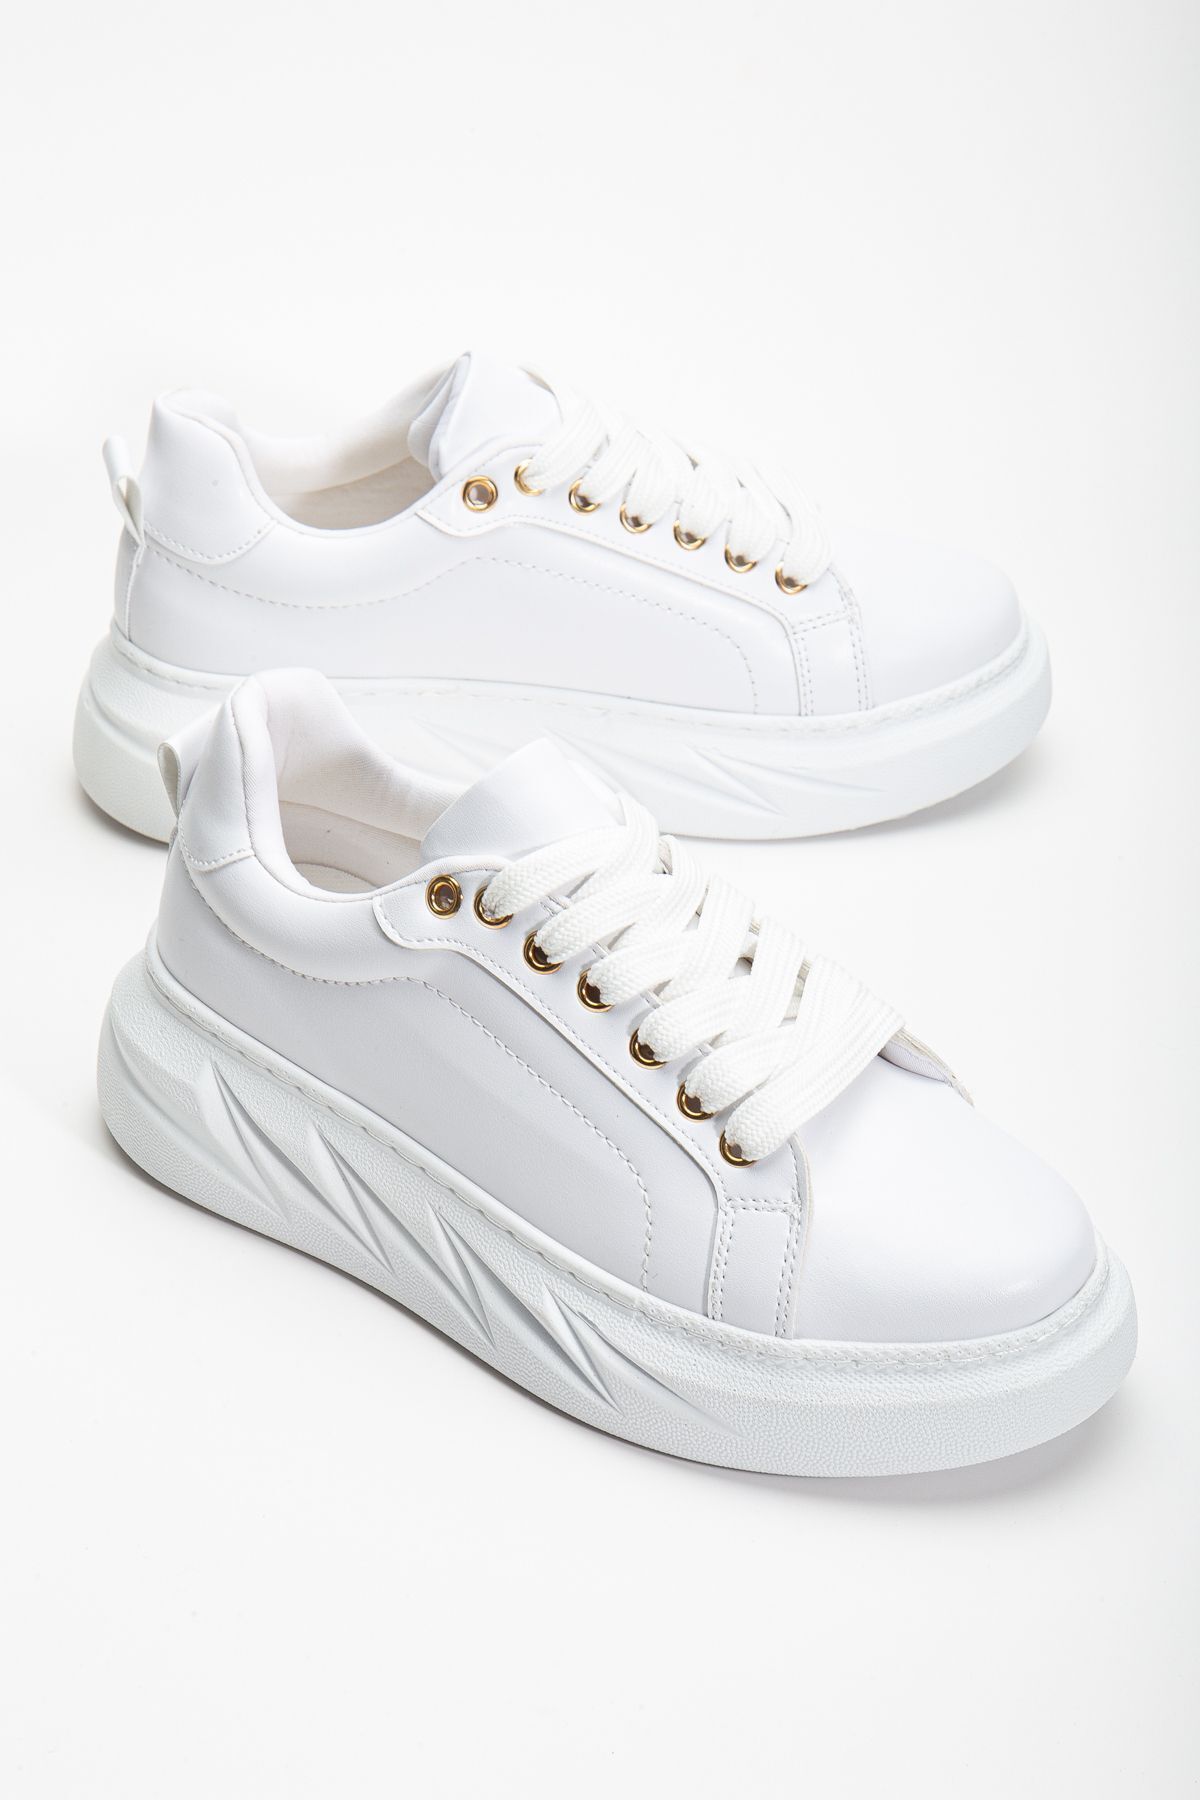 ElloLita Jeane Beyaz Sneakers